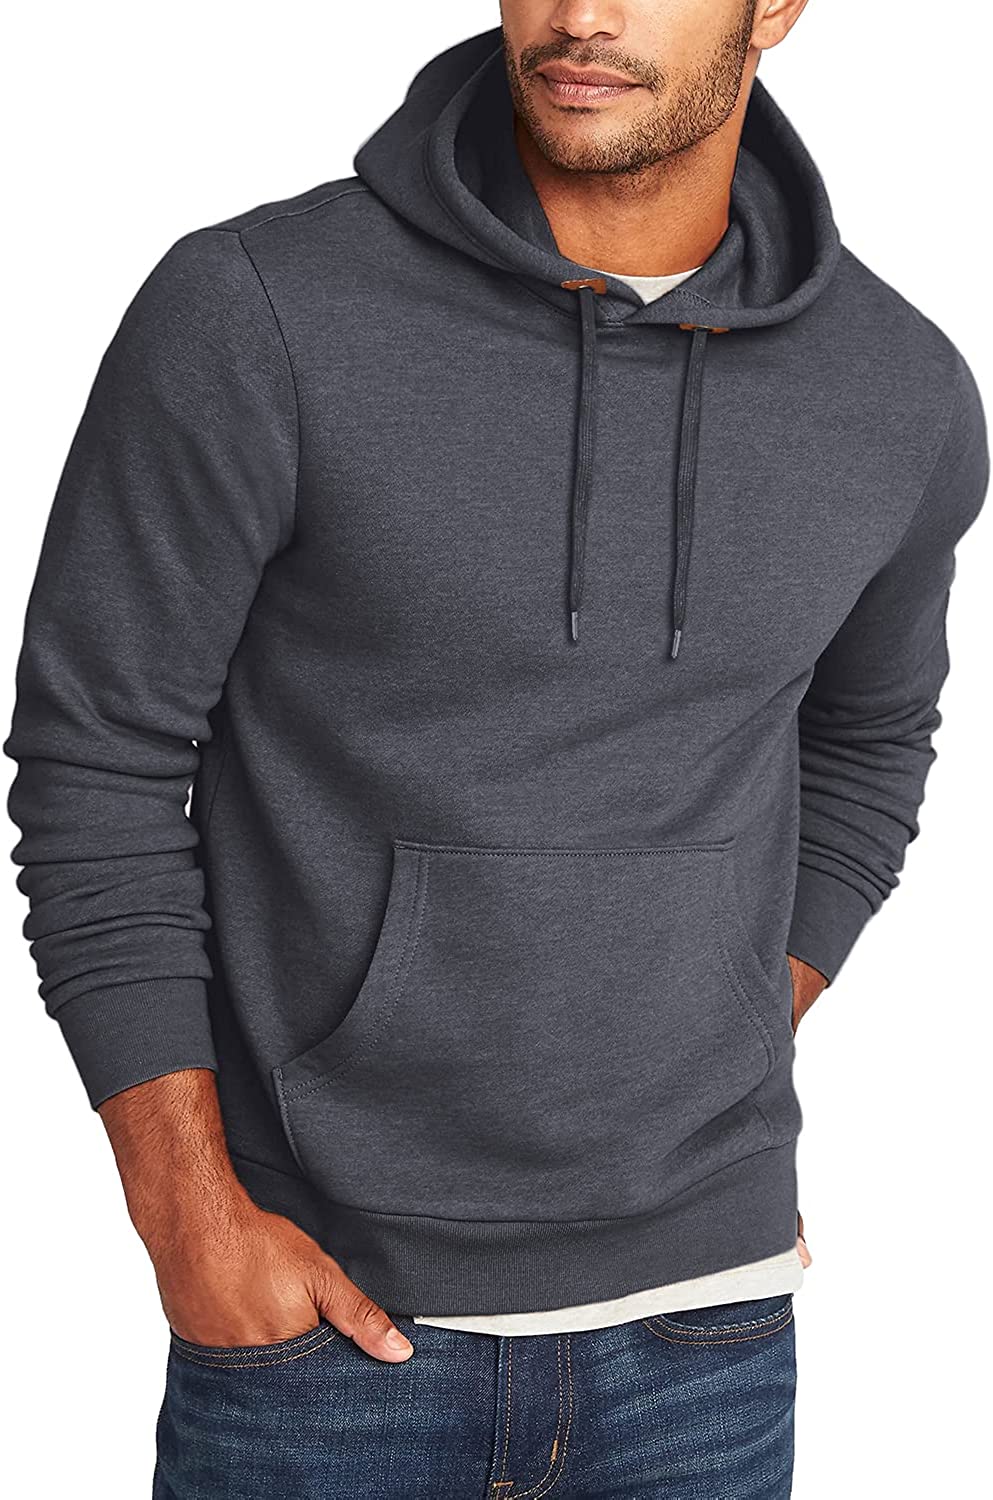 COOFANDY Men's Athletic Hoodie Long Sleeve Drawstring Sports Pullover Hooded Casual Fashion Sweatshirt with Pockets Fashion Hoodies & Sweatshirts Coofandy's 